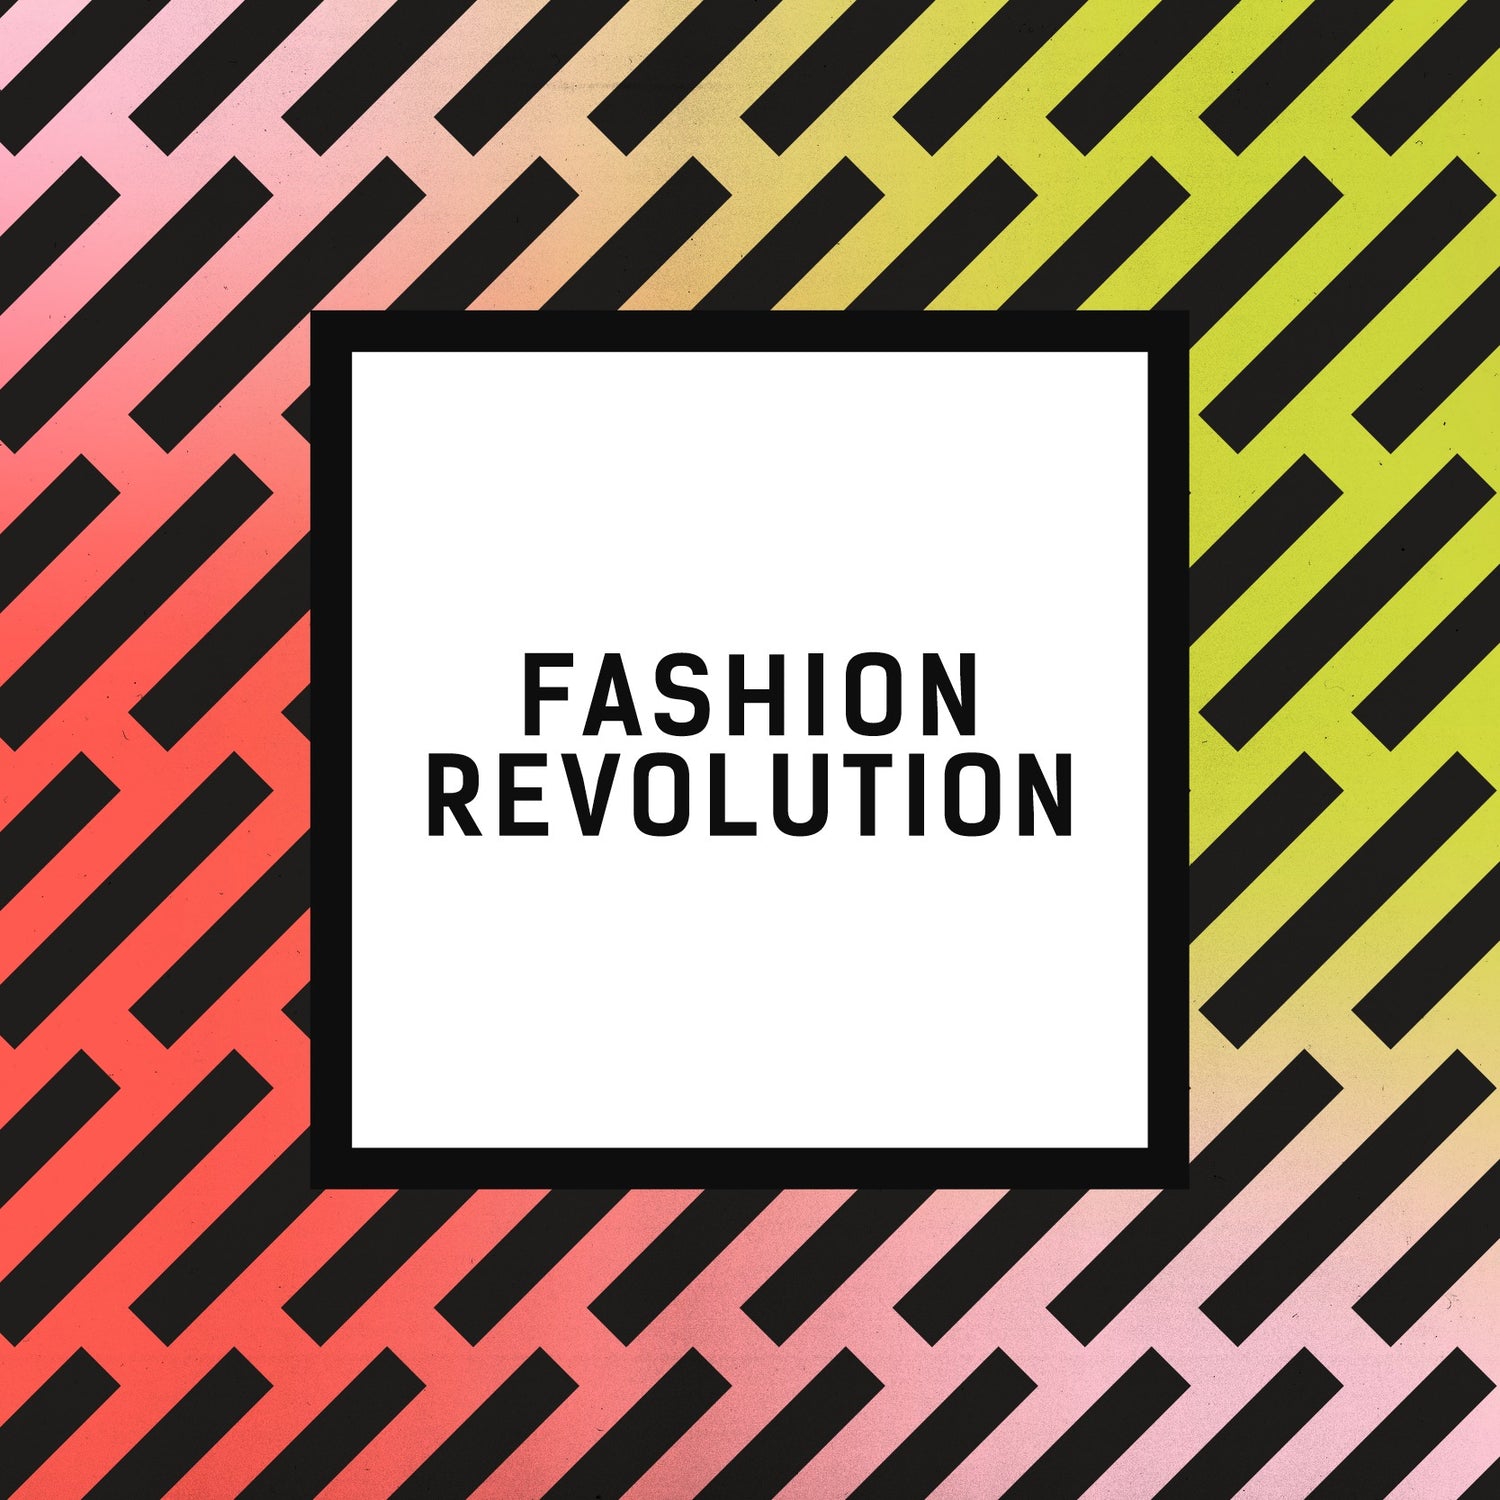 Fashionrevolution Projects :: Photos, videos, logos, illustrations